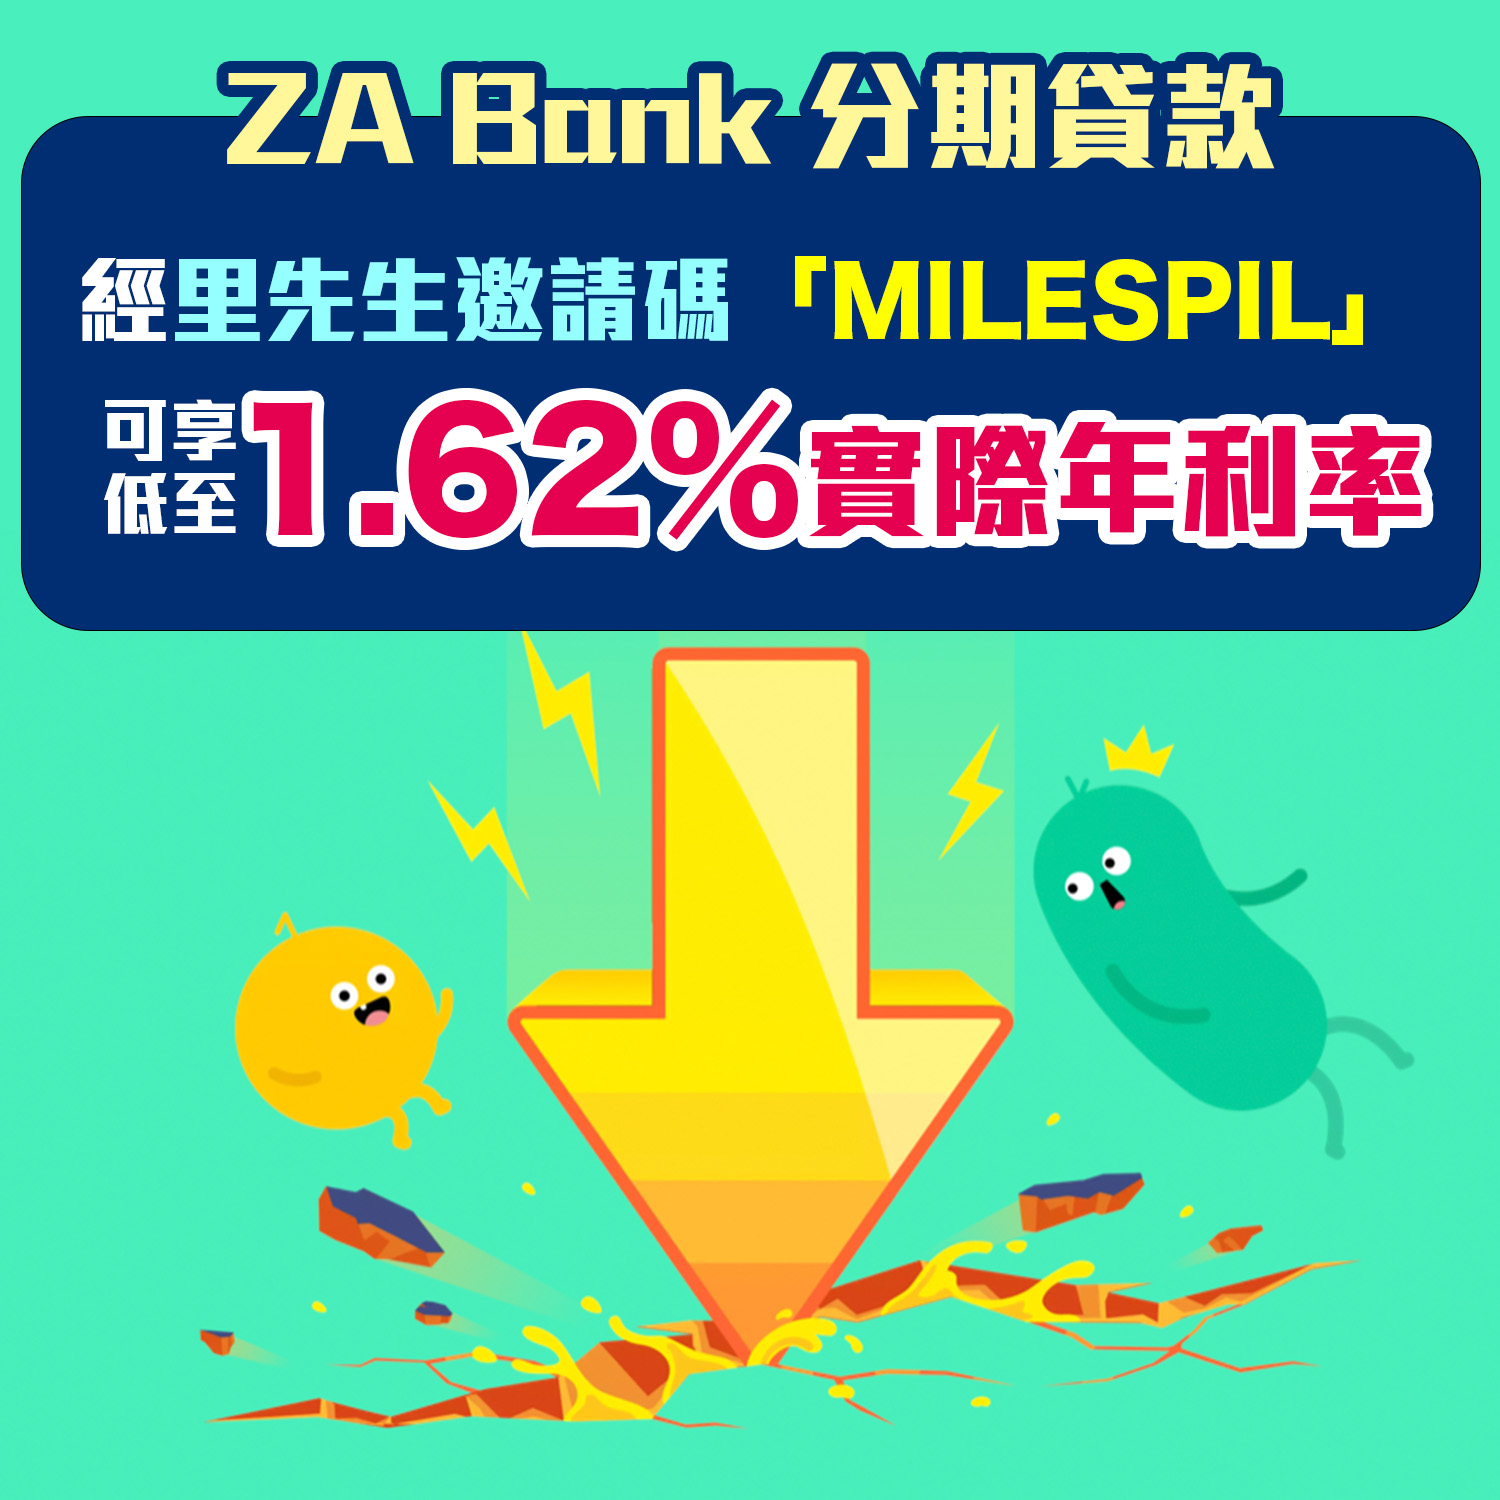 【ZA Bank低息分期貸款】新客戶經里先生邀請碼「MILESPIL」提取貸款 可享實際年利率低至1.62%！